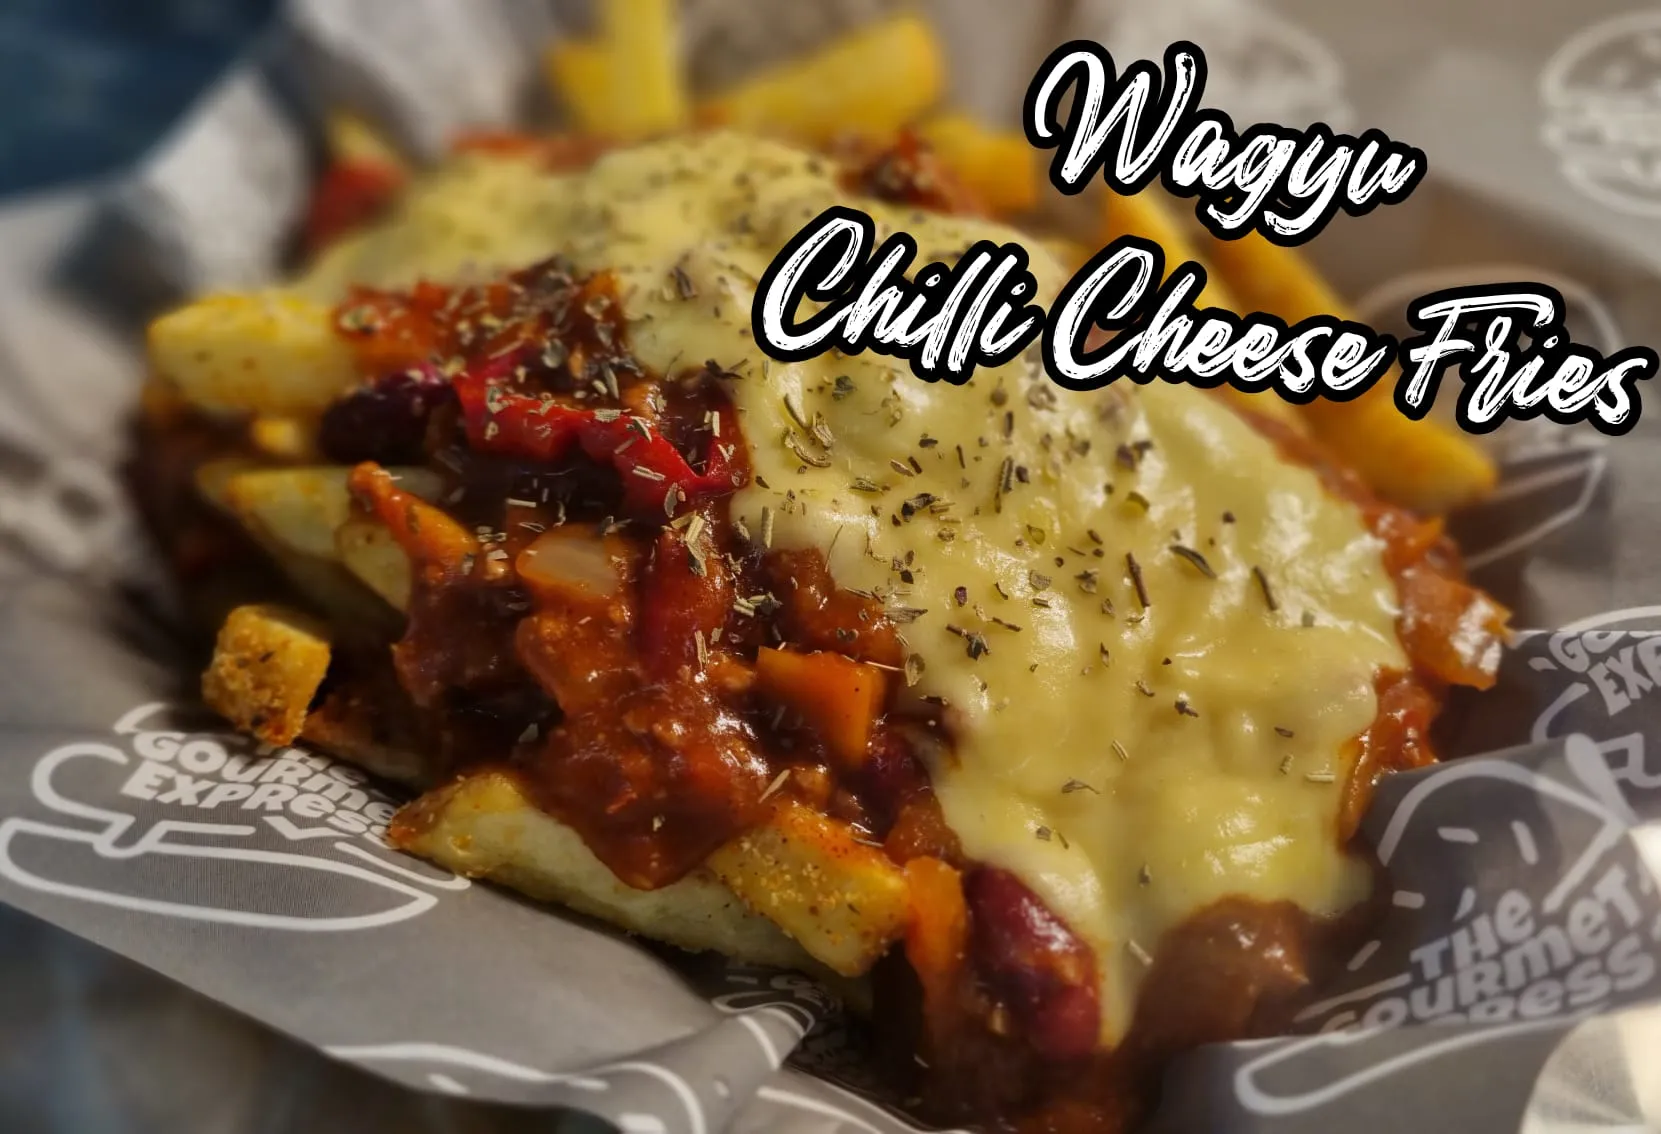 Wagyu Chilli Cheese Fries